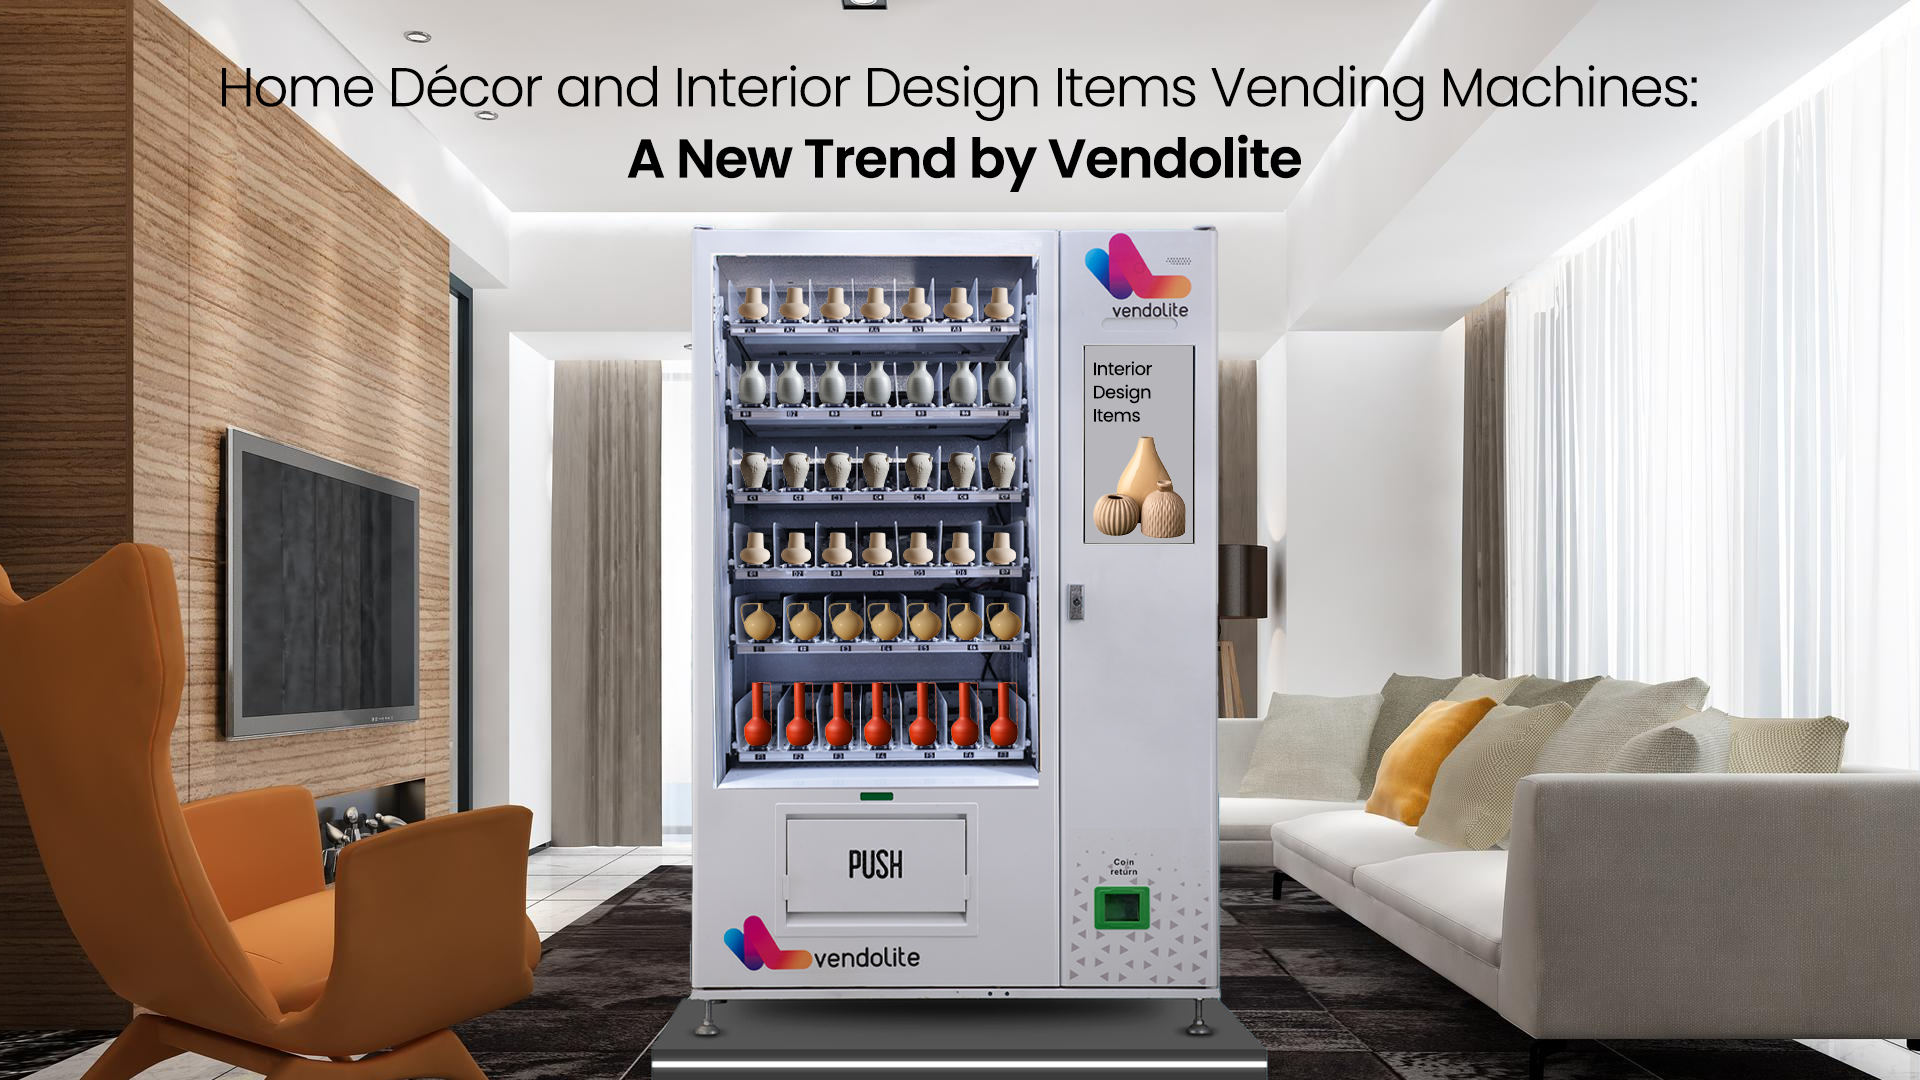 Home Décor and Interior Design Items Vending Machines: A New Trend by Vendolite